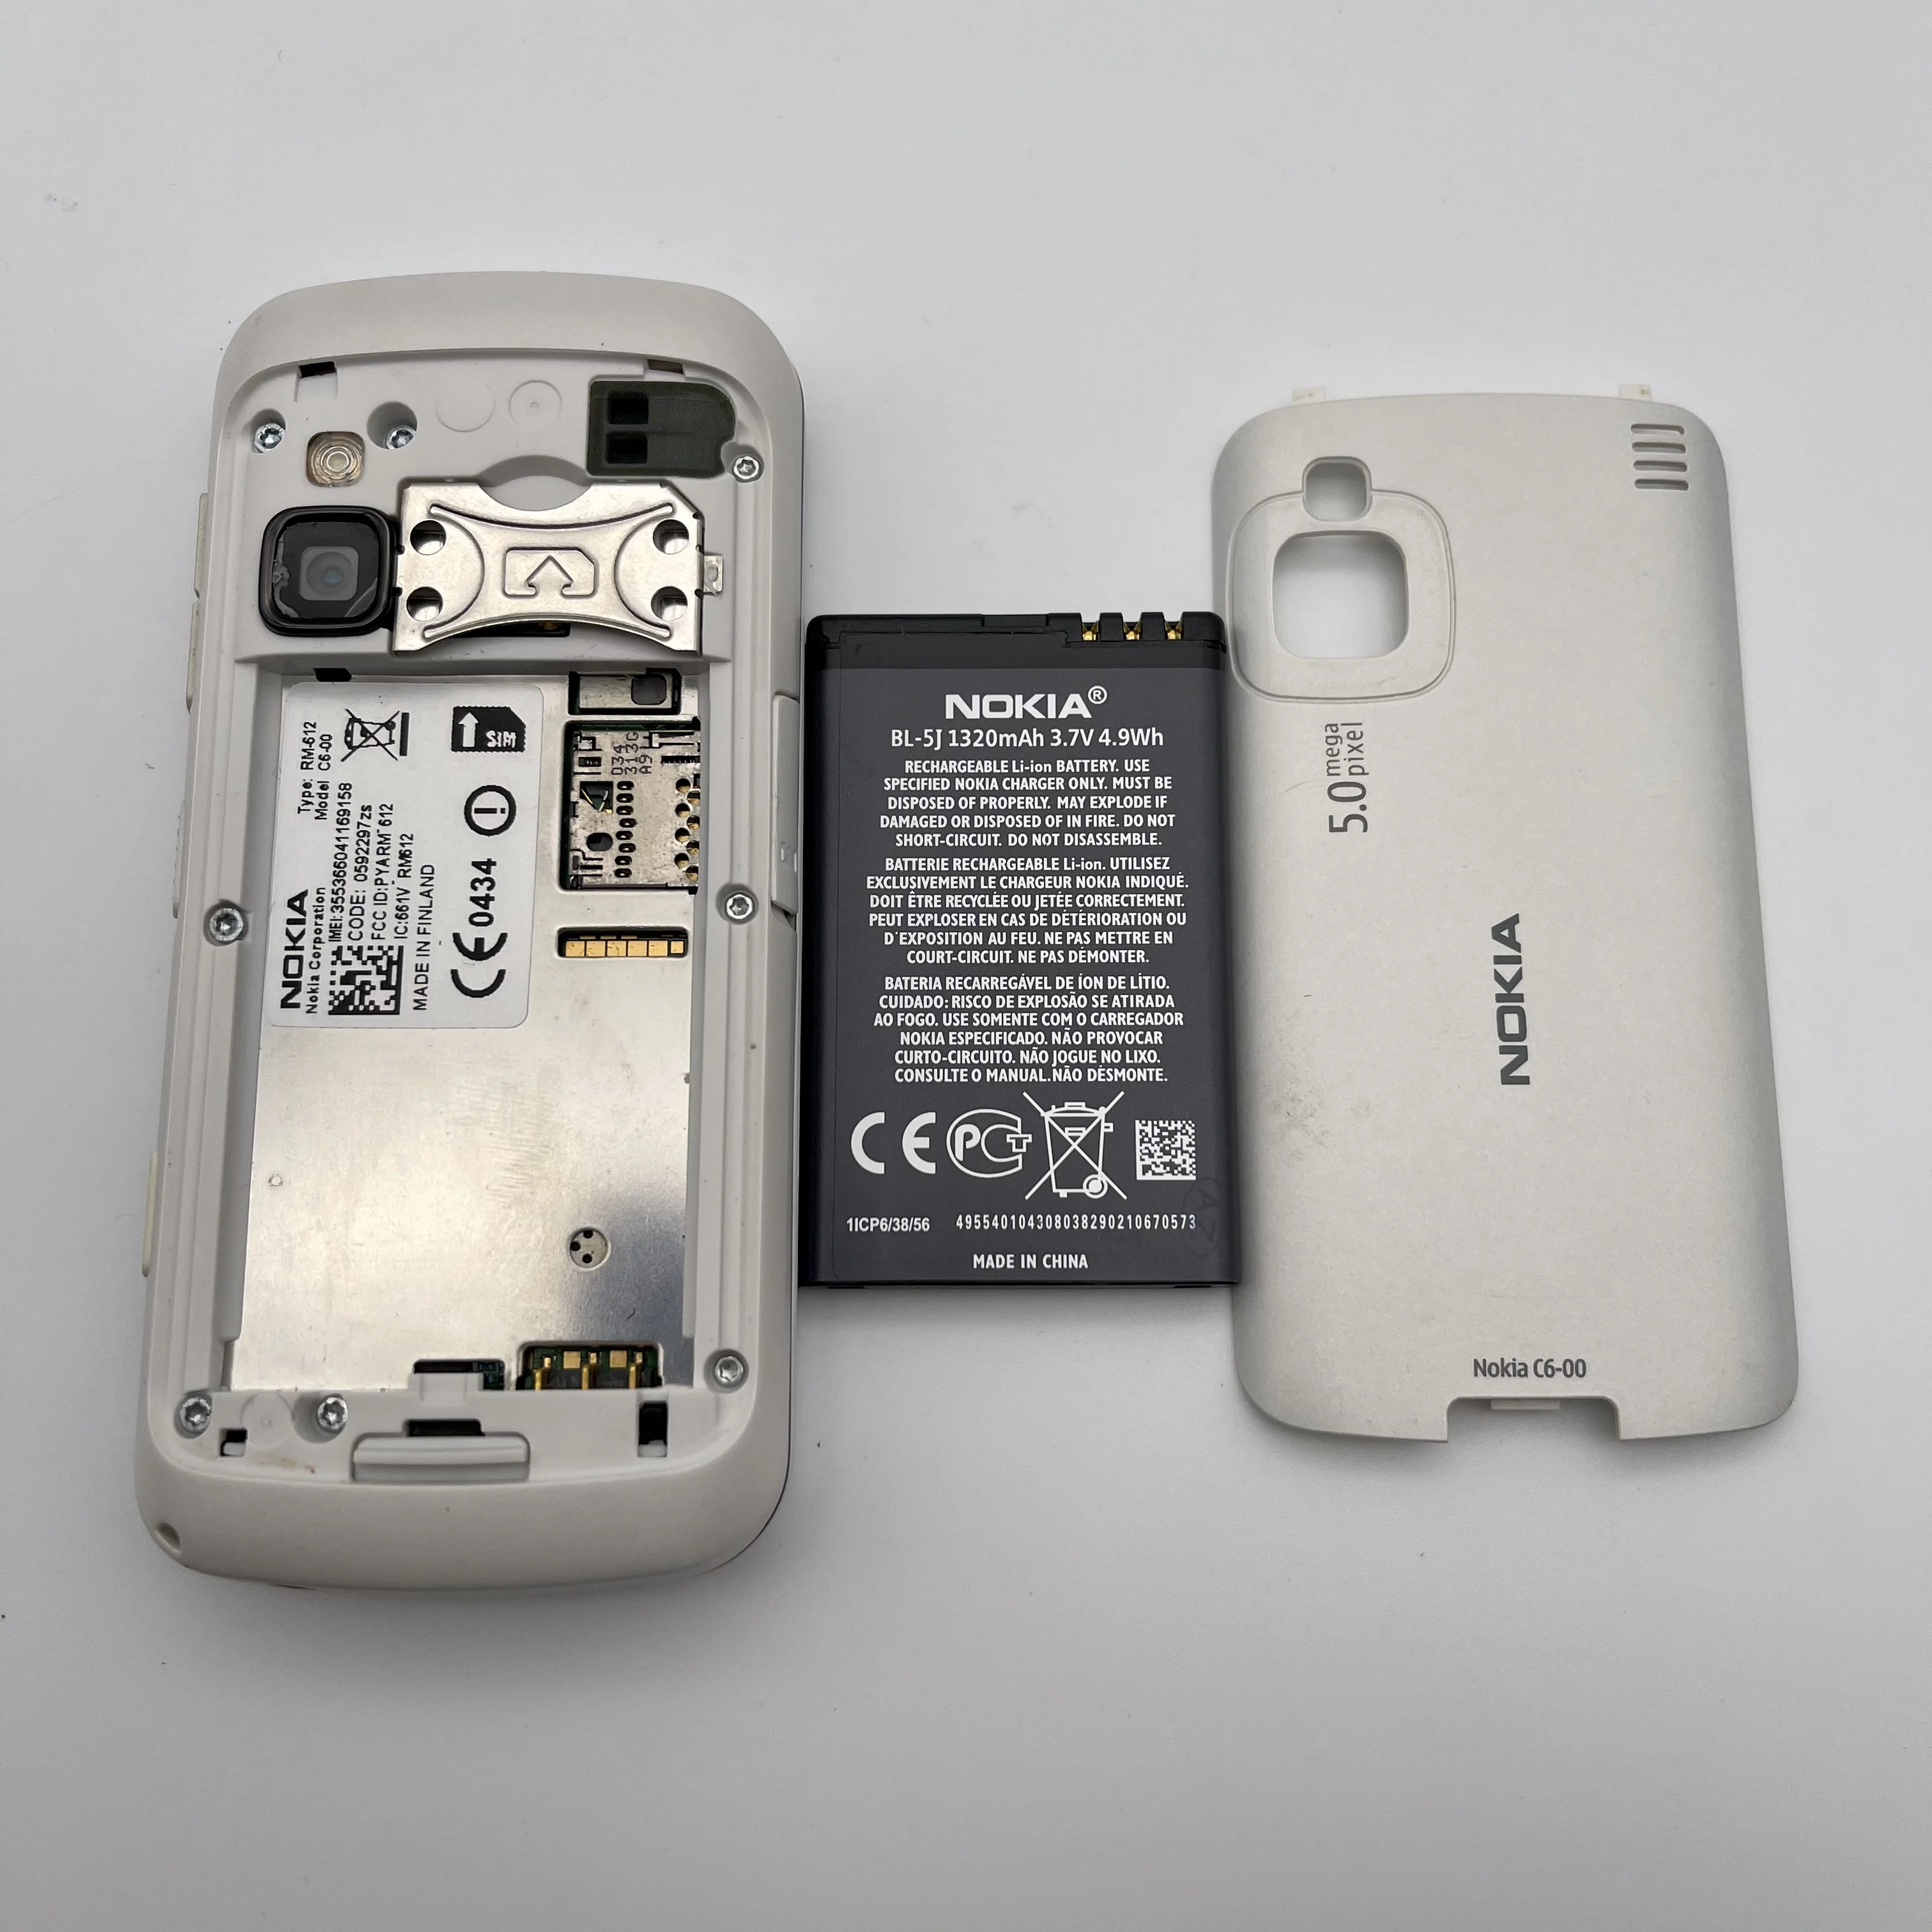 Nokia C6-00 Refurbished Original Unlocked Nokia C6-00 3.2' Mobile 